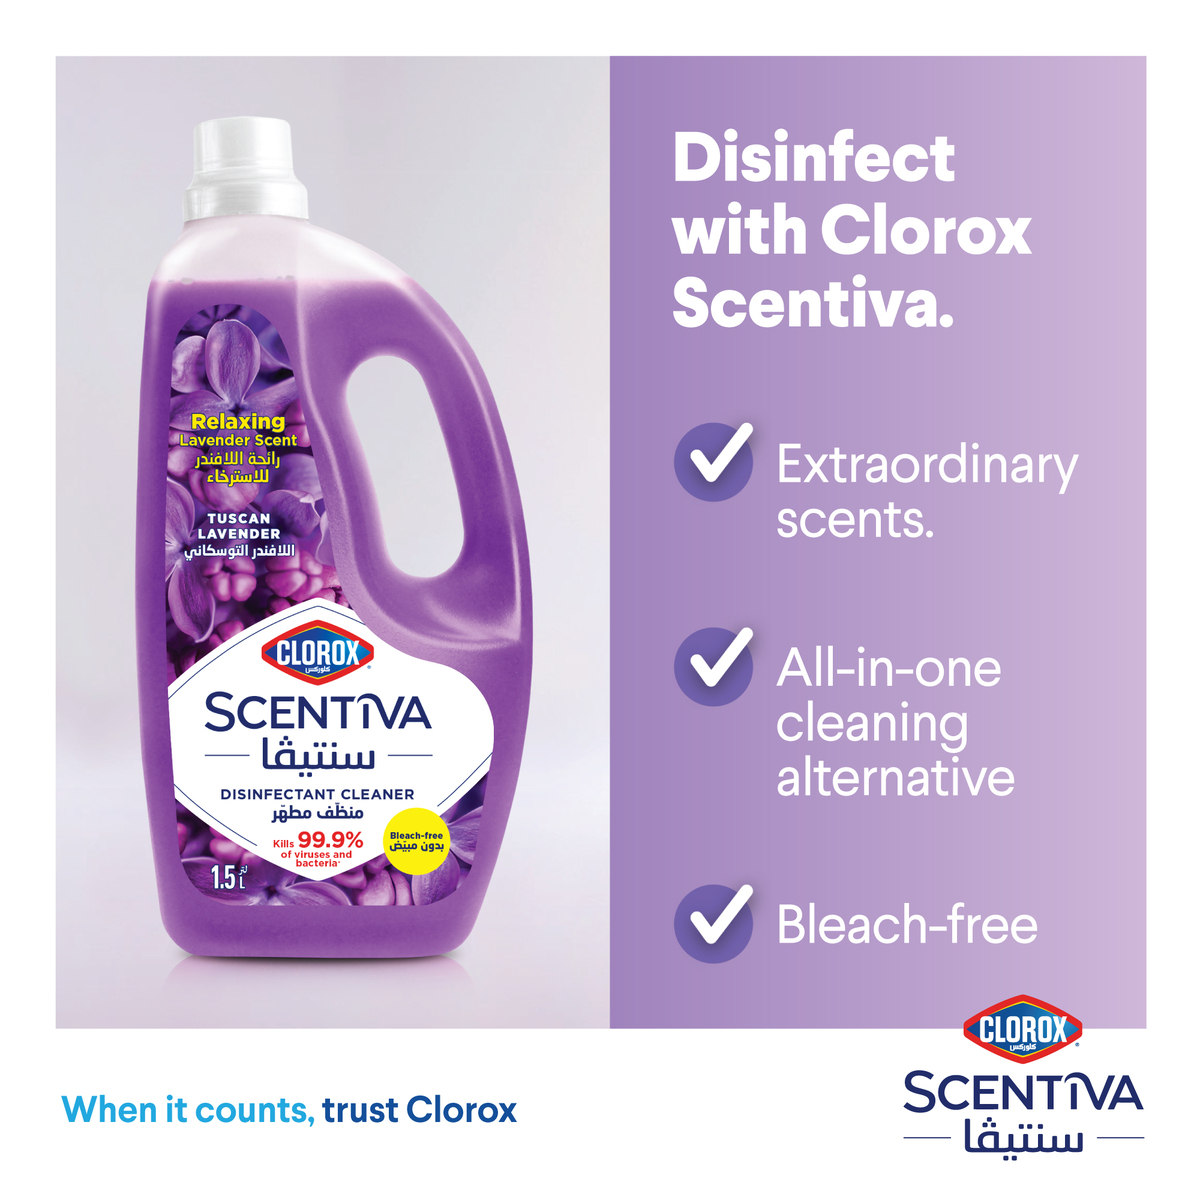 Clorox Scentiva Disinfectant Cleaner Tuscan Lavender 1.5 Litres